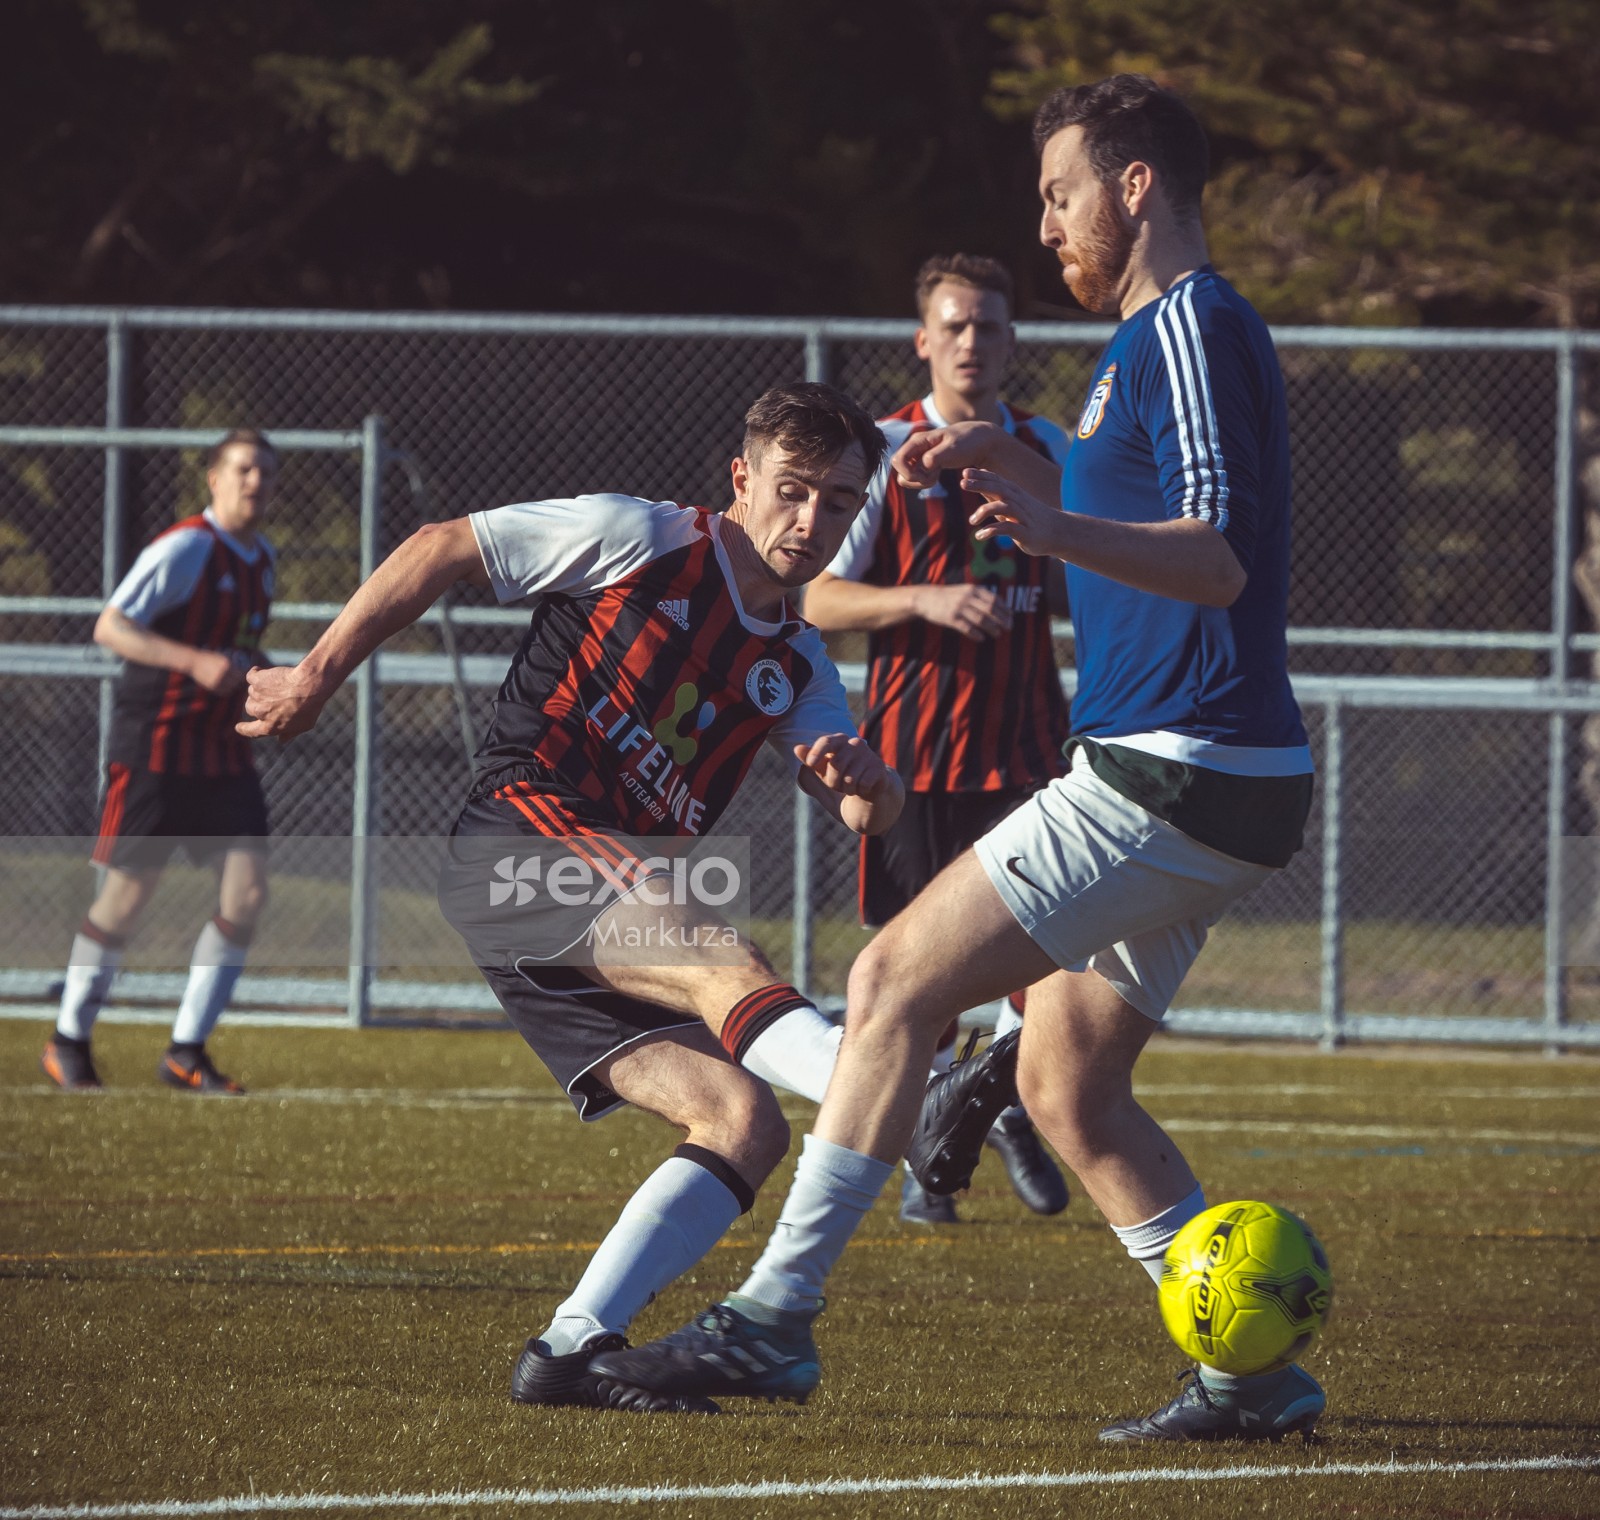 Player kicks football between opponents legs - Sports Zone sunday league